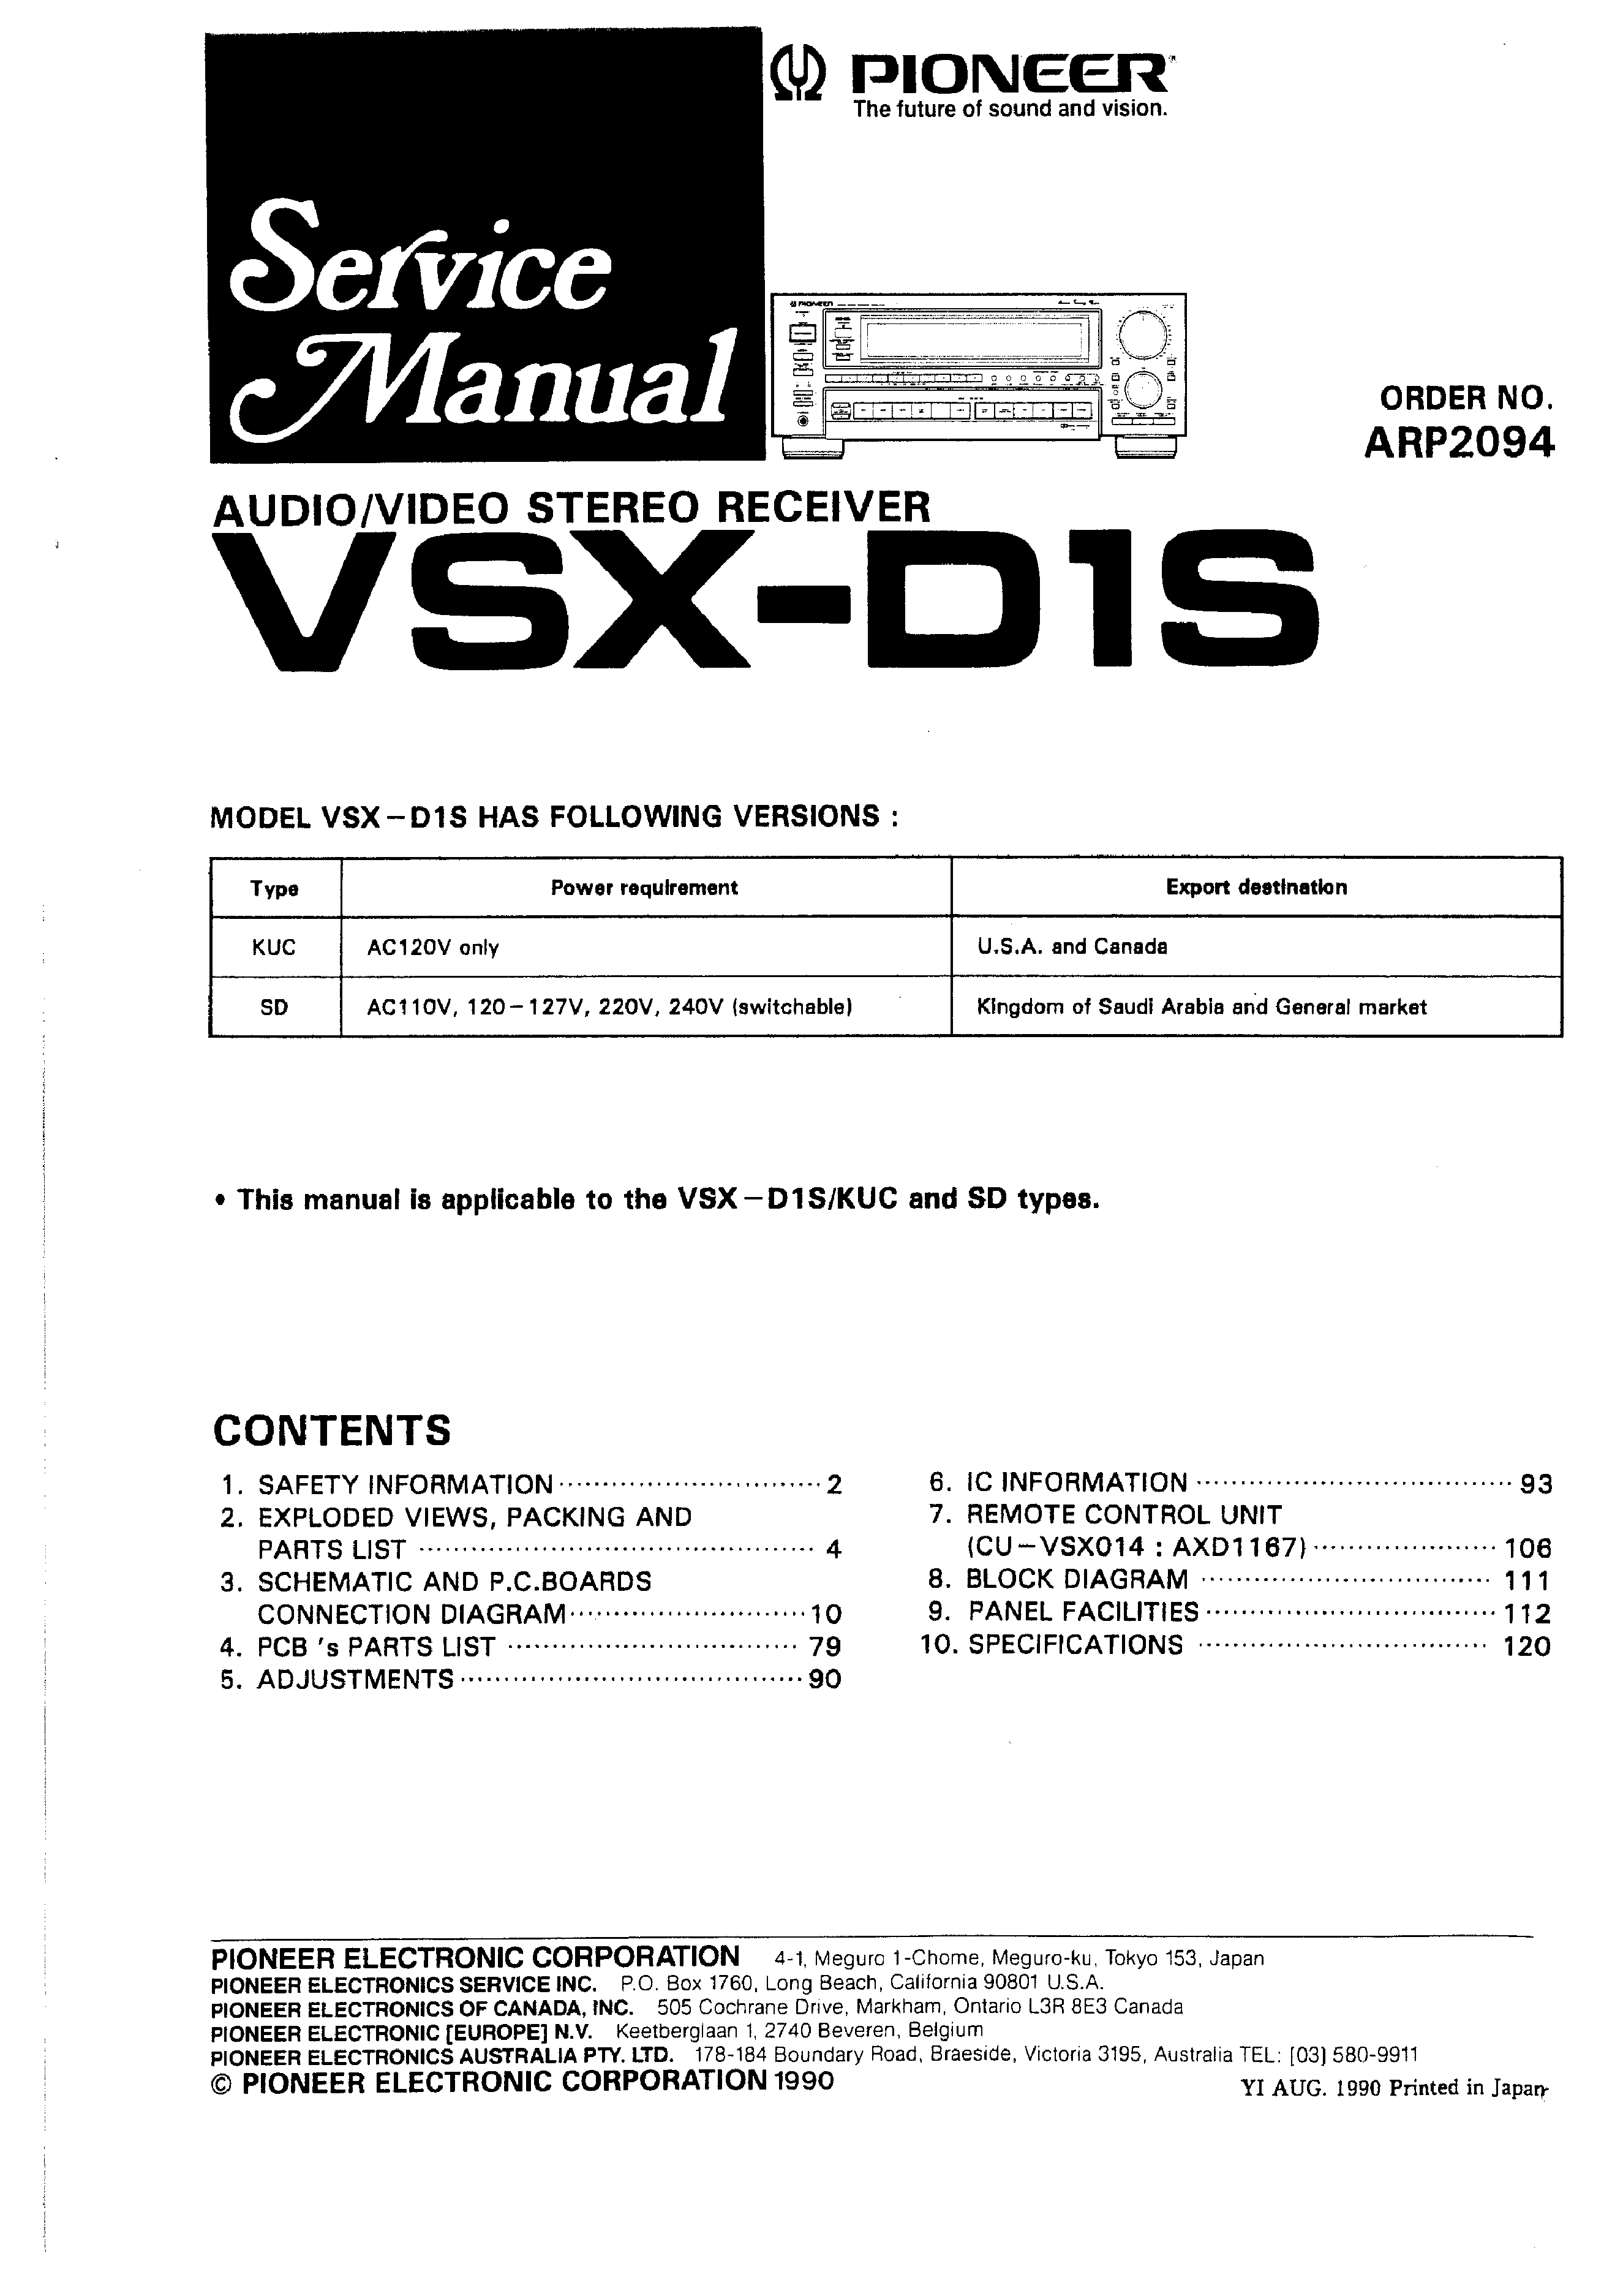 Service Manual for PIONEER VSXD1S - Download